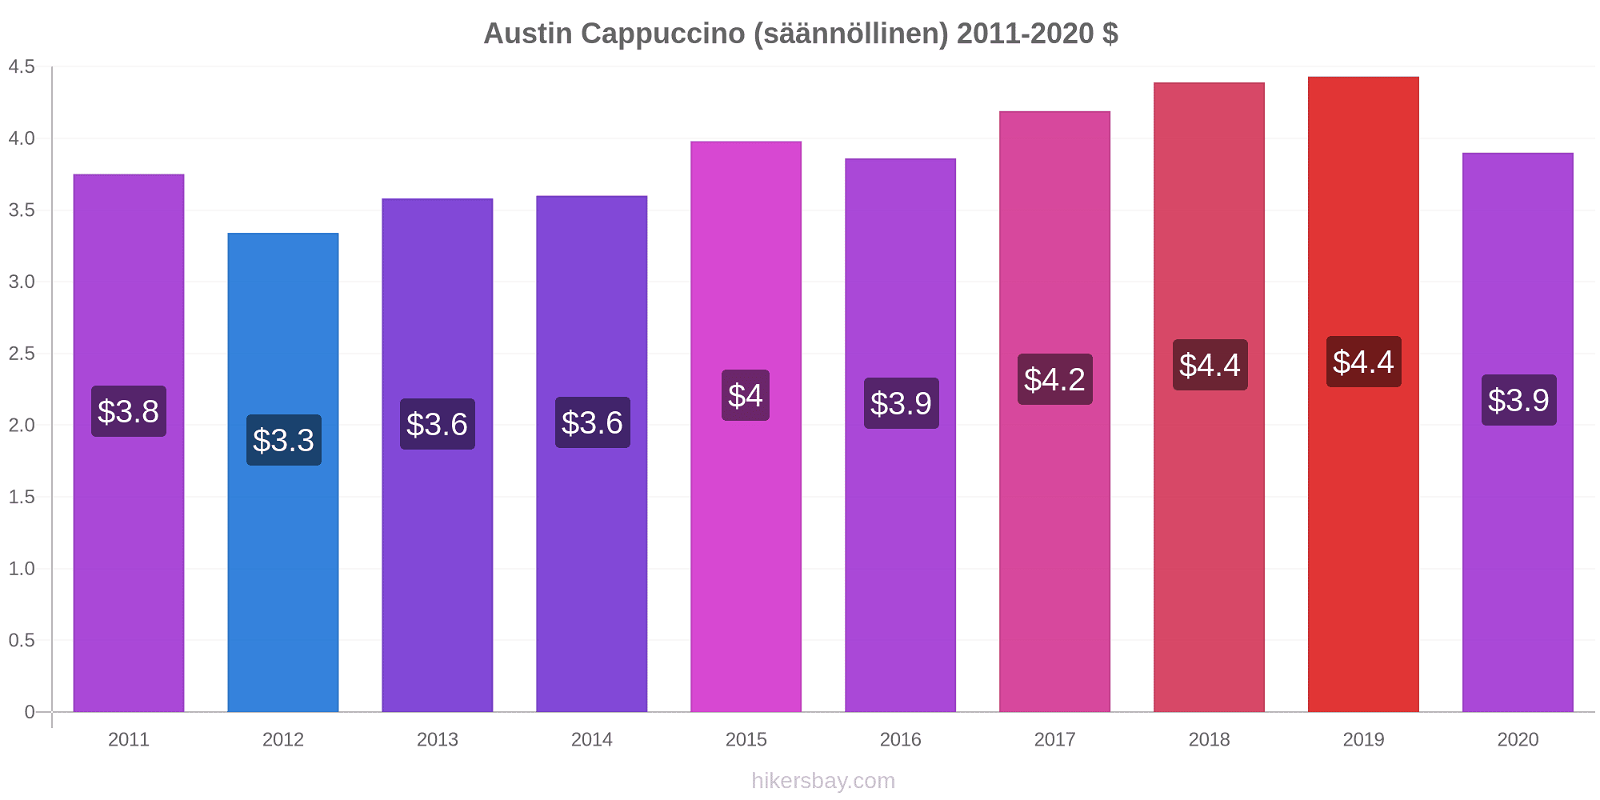 Austin hintojen muutokset Cappuccino (säännöllinen) hikersbay.com